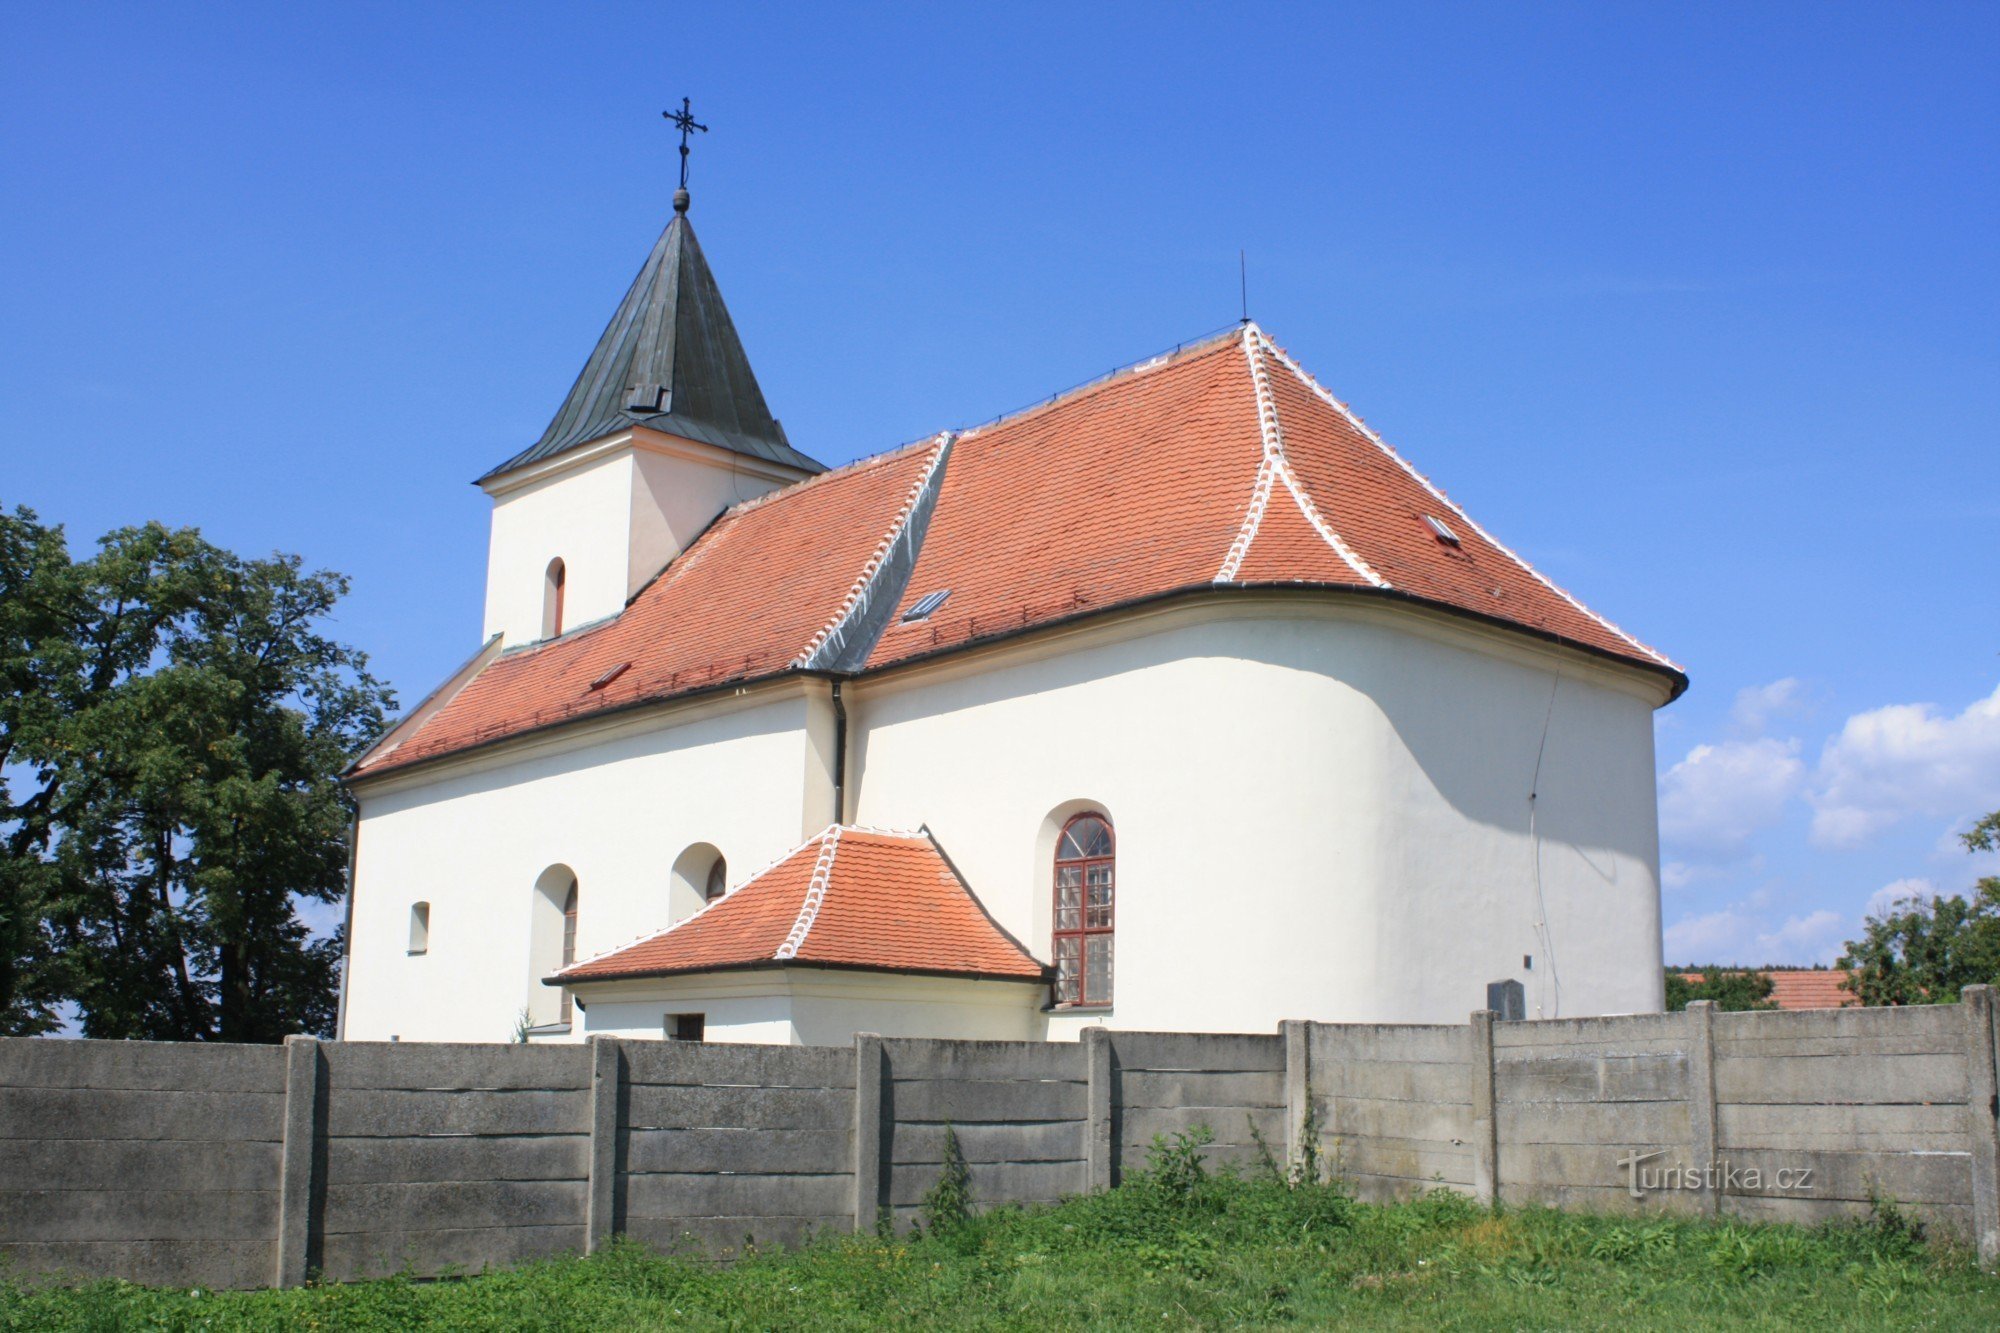 Babice nad Svitavou - church of St. John the Baptist